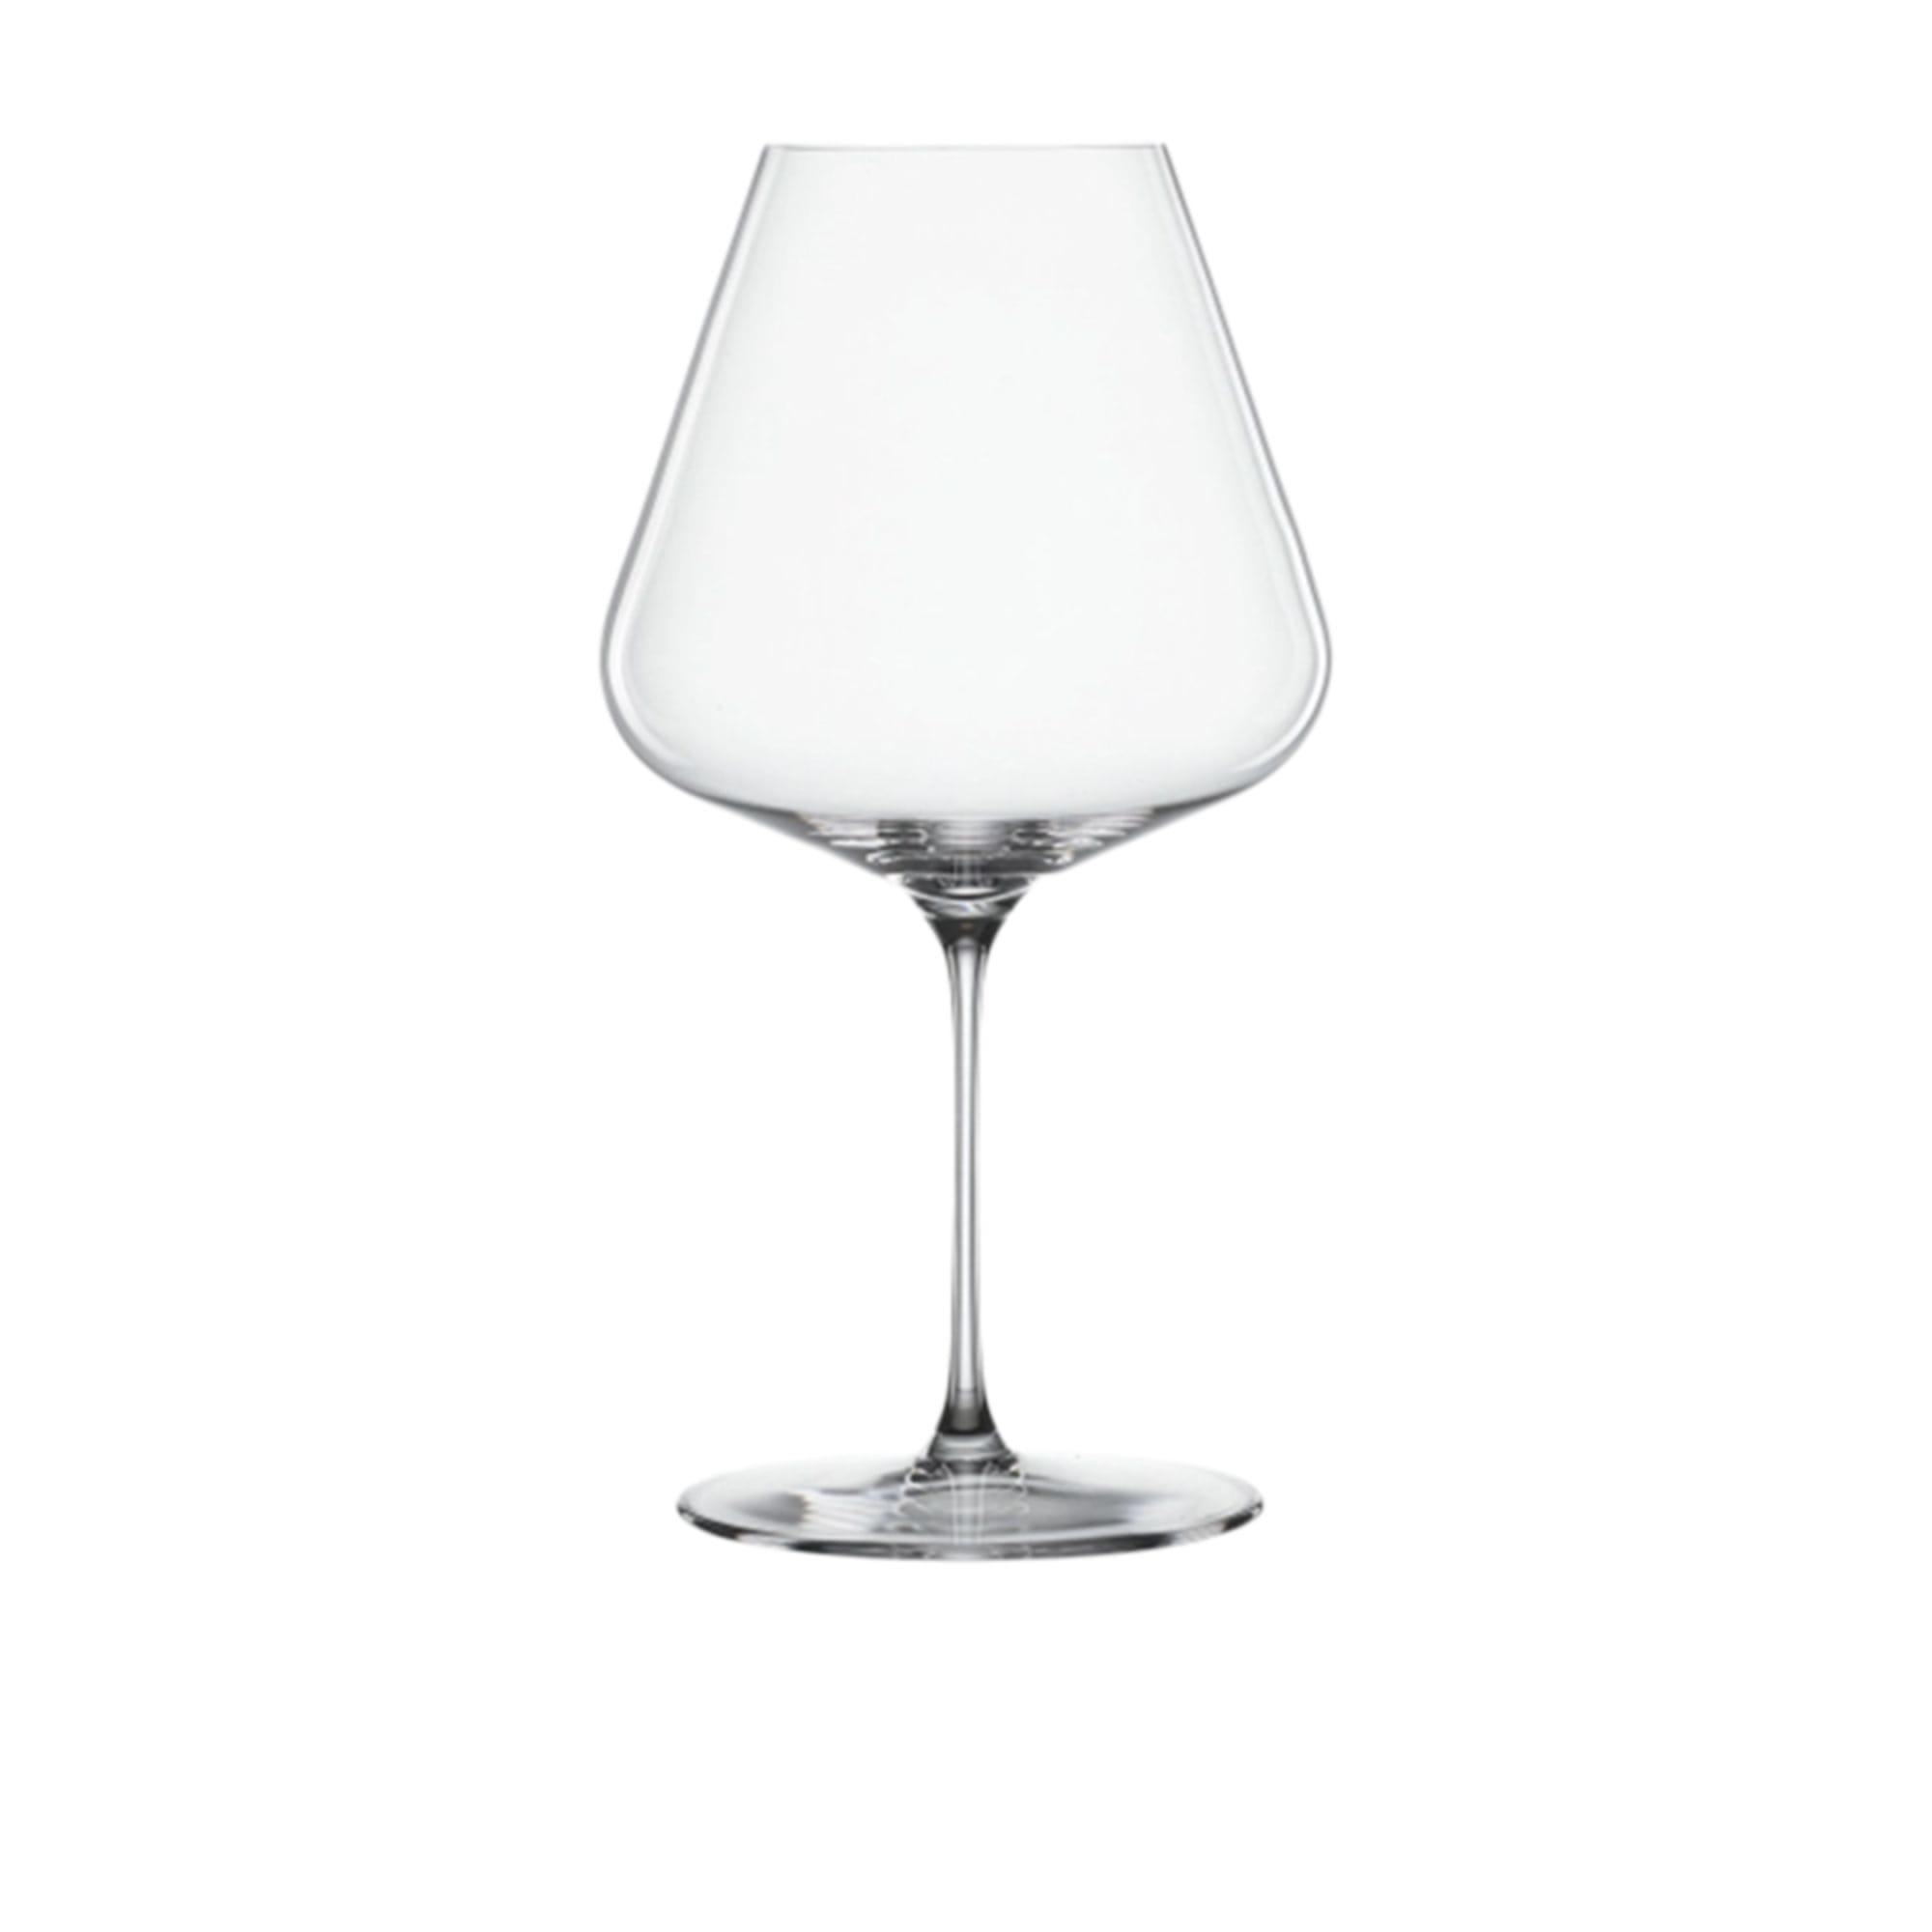 Spiegelau Definition Burgundy Glass 960ml Set of 6 Image 2